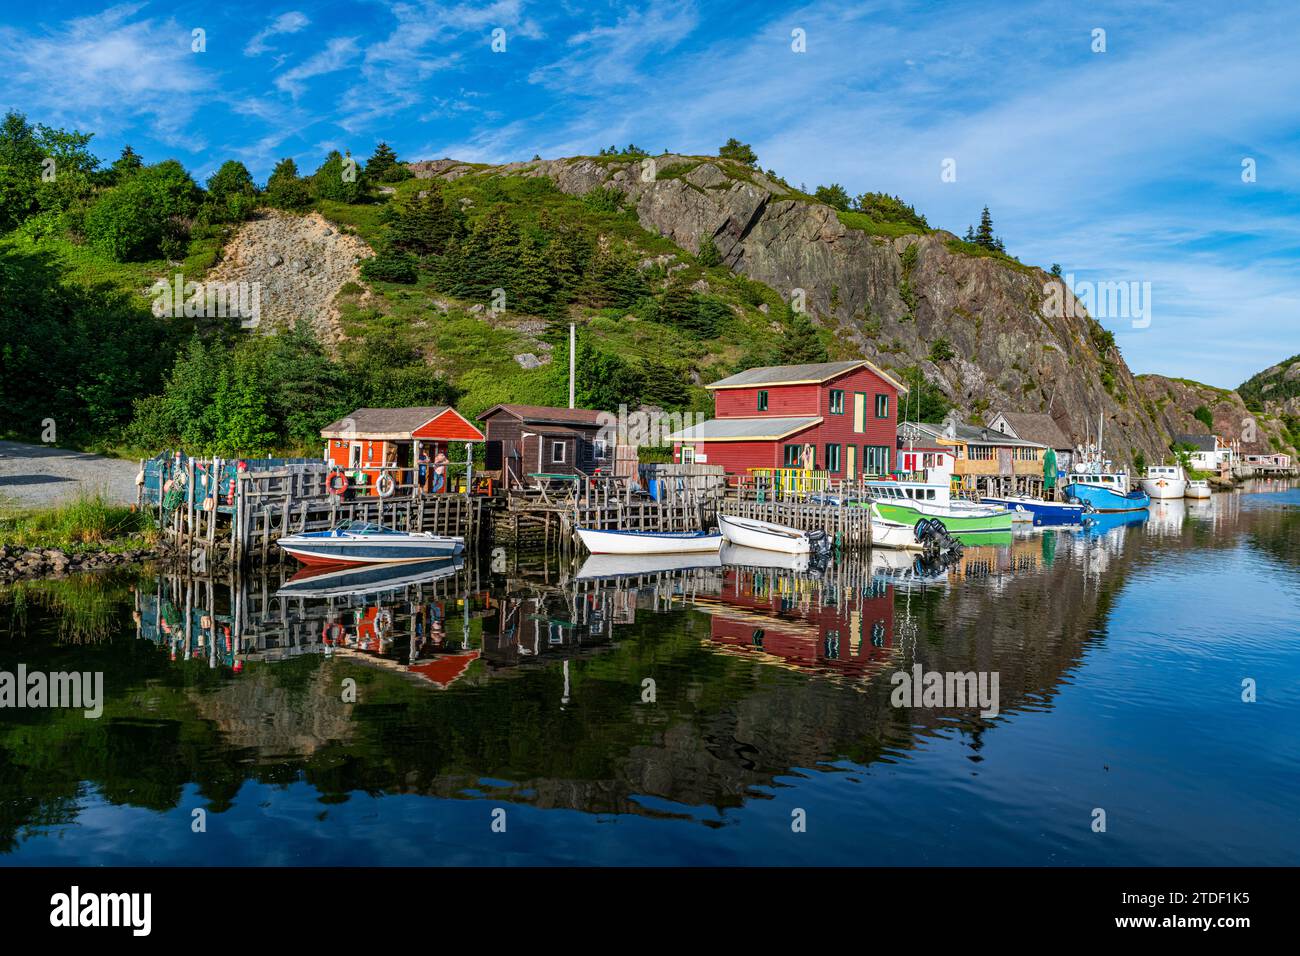 Port de bateau de Quidi Vidi, St. John's, Terre-Neuve, Canada, Amérique du Nord Banque D'Images